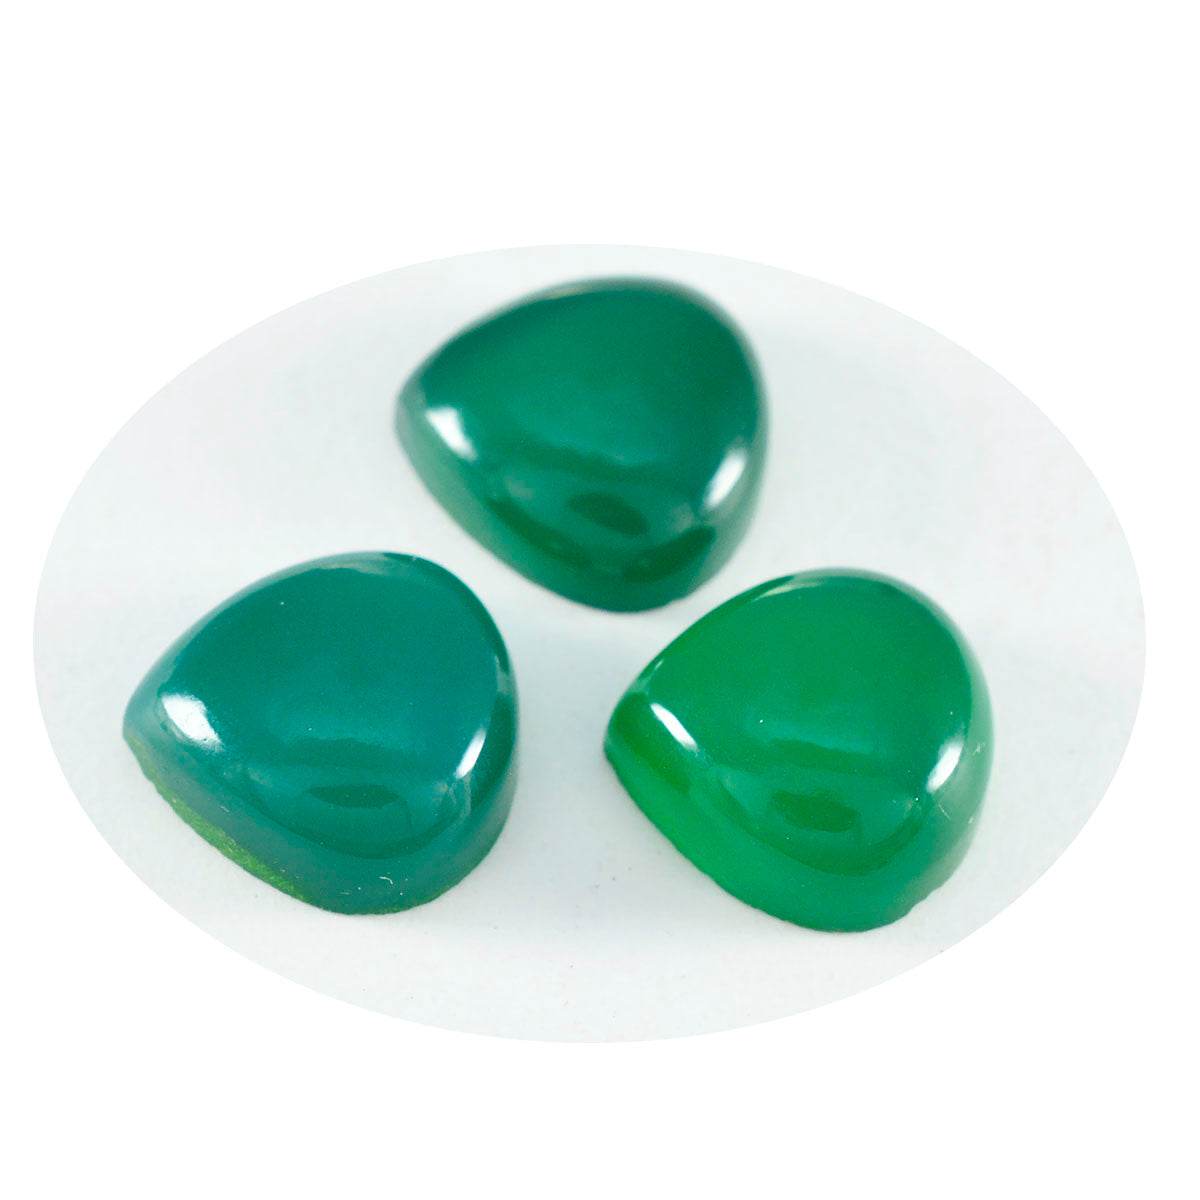 Riyogems 1PC Green Onyx Cabochon 12x12 mm Heart Shape sweet Quality Loose Gem